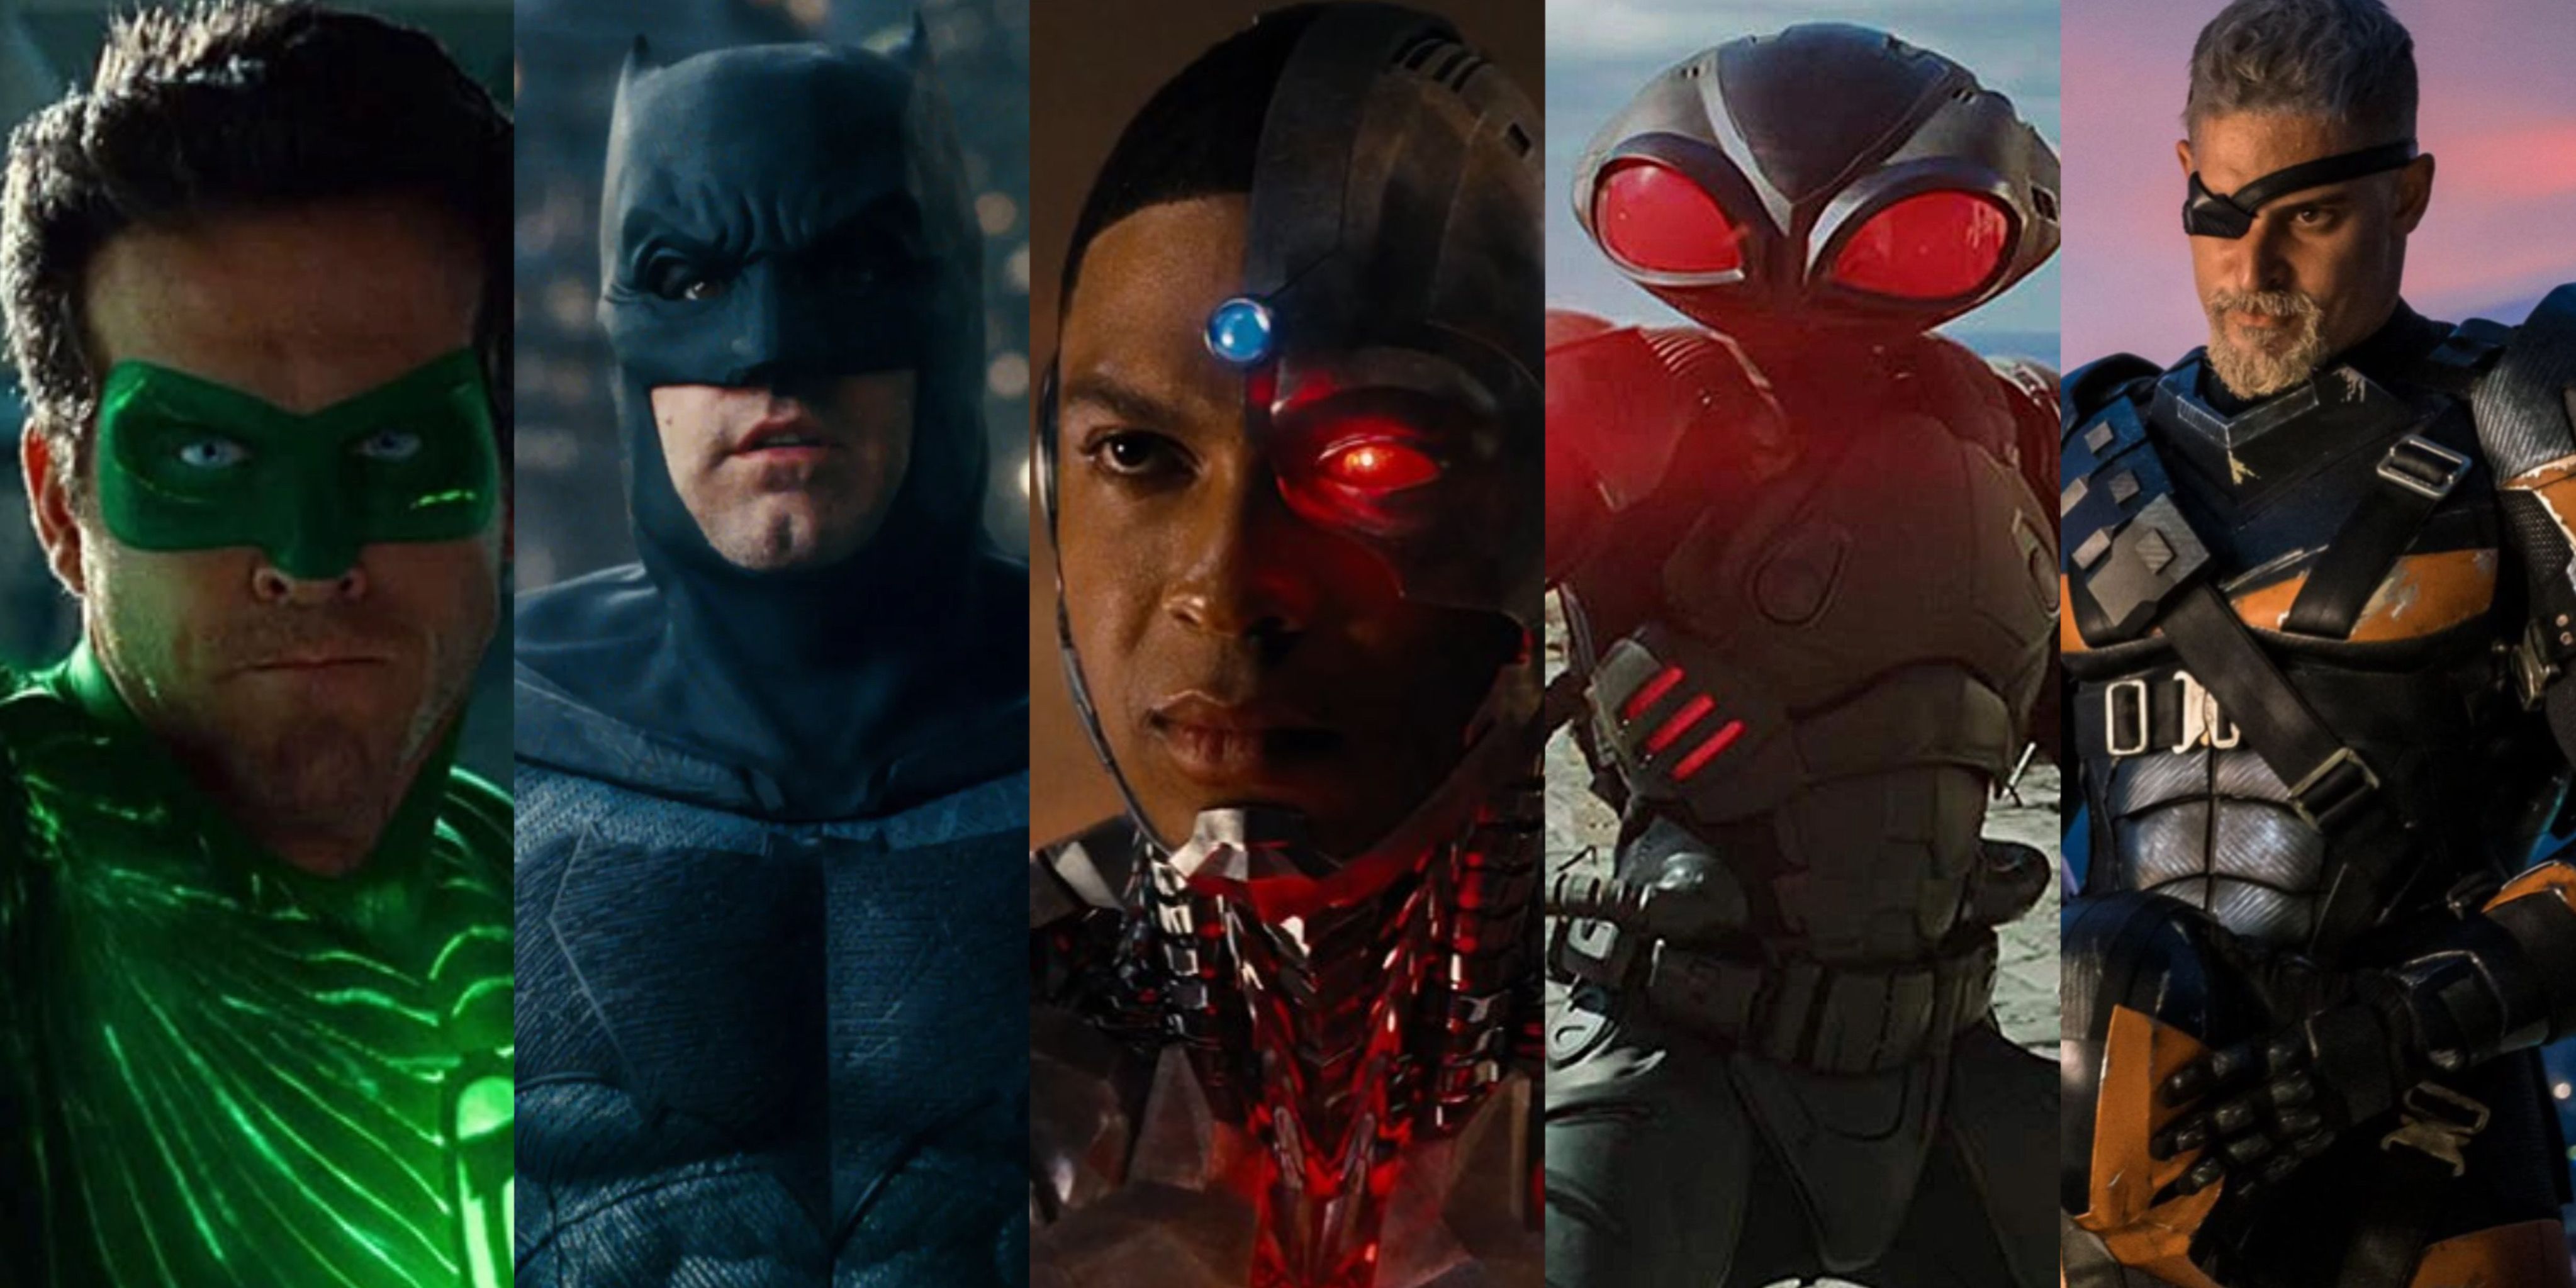 Ryan Reynolds as Green Lantern, Ben Affleck as Batman, Ray Fisher as Cyborg, Black Mamba from Aquaman, and Joe Manganiello as Deathstroke